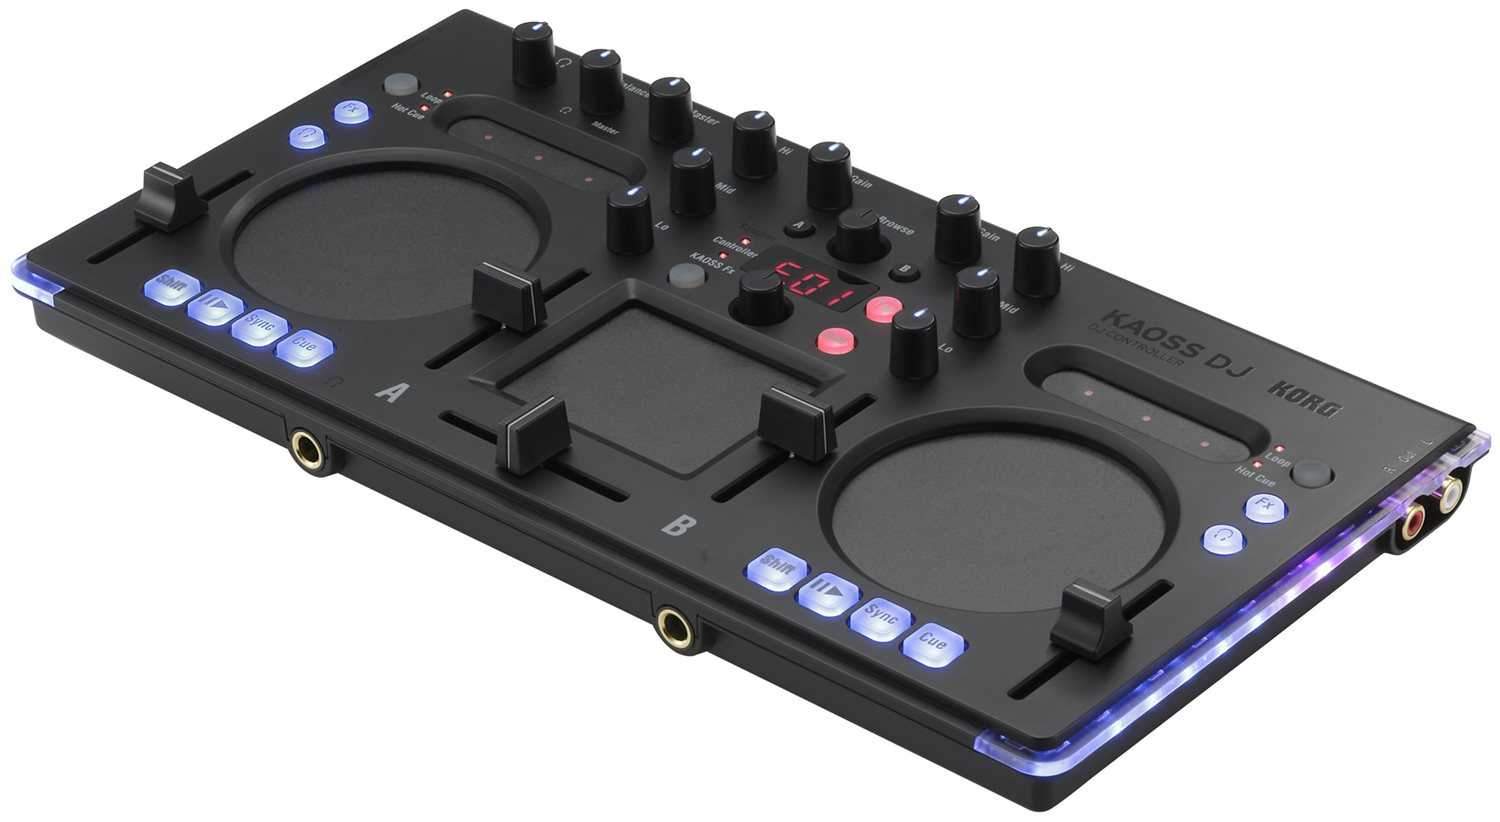 Korg KAOSS DJ 2-Channel DJ Controller & Interface - PSSL ProSound and Stage Lighting